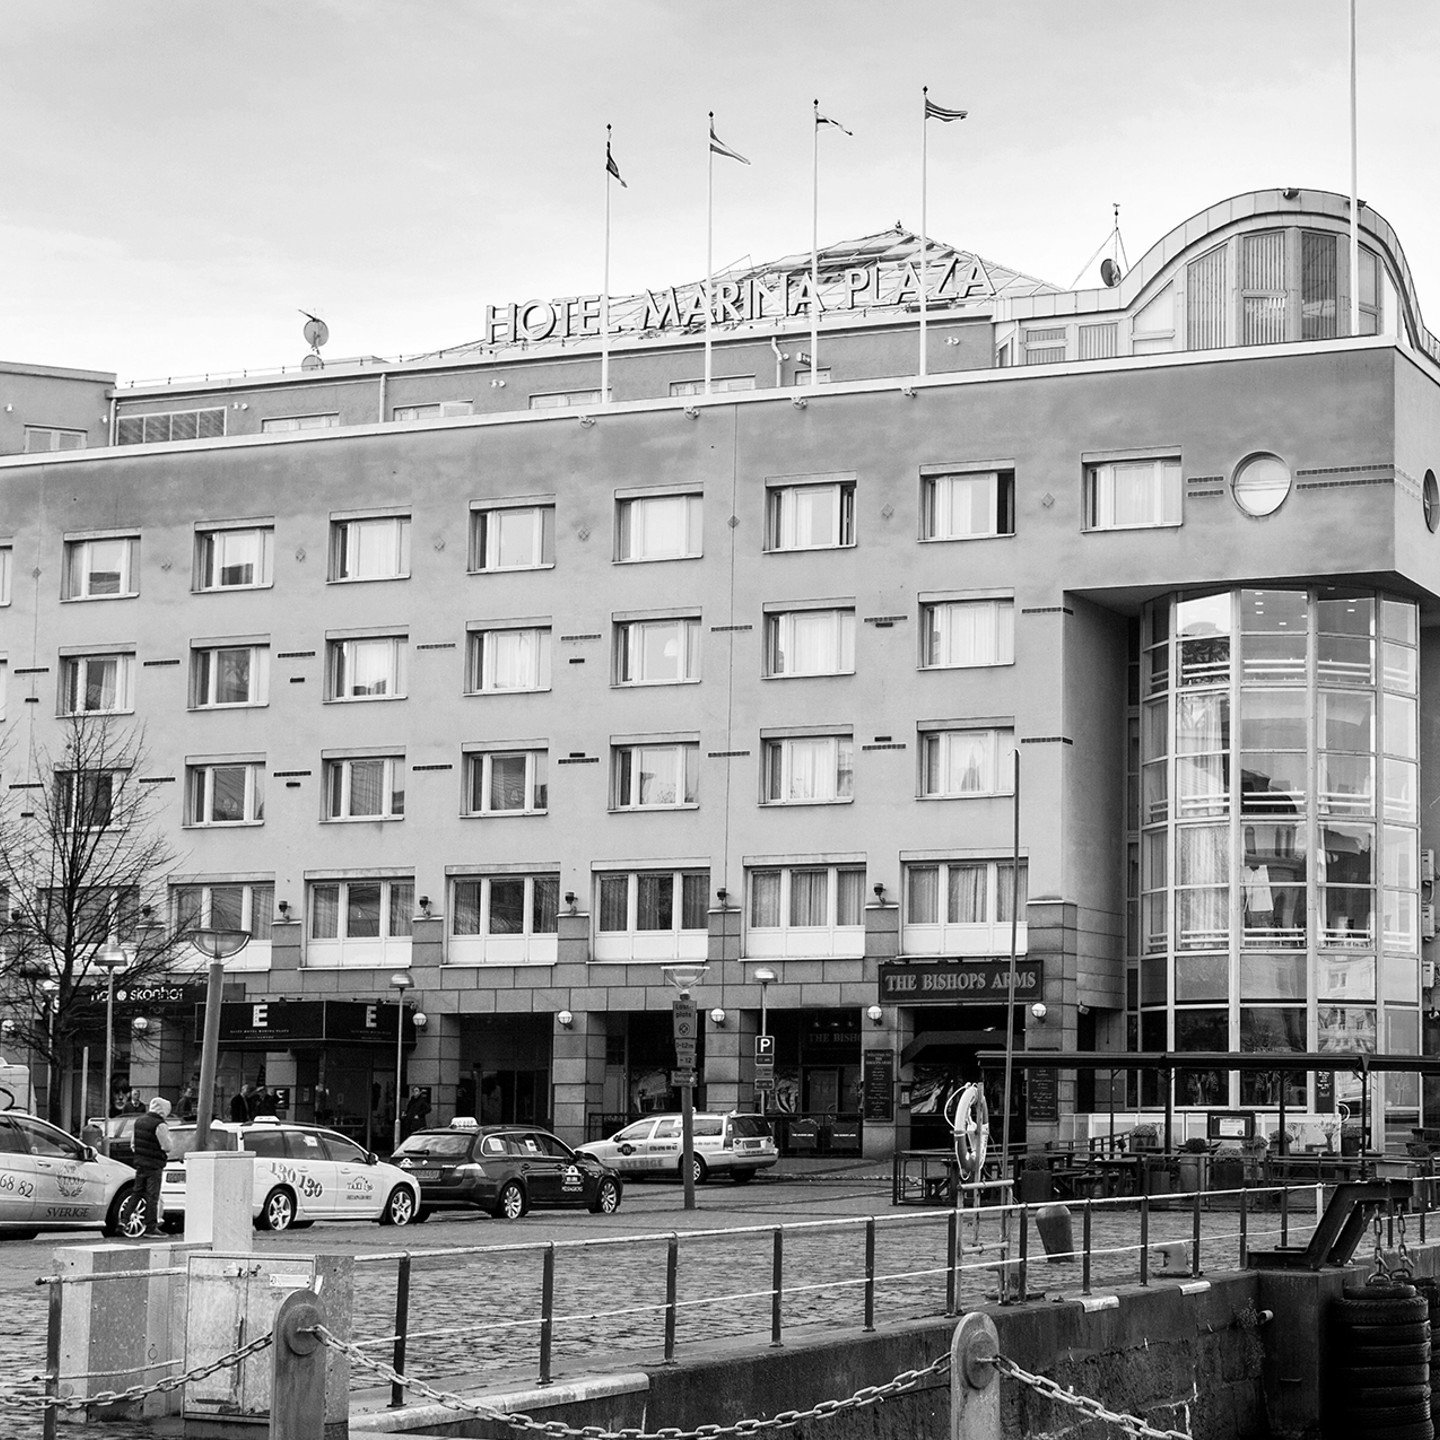 Black and white photo of Elite Hotel Marina Plaza's facade